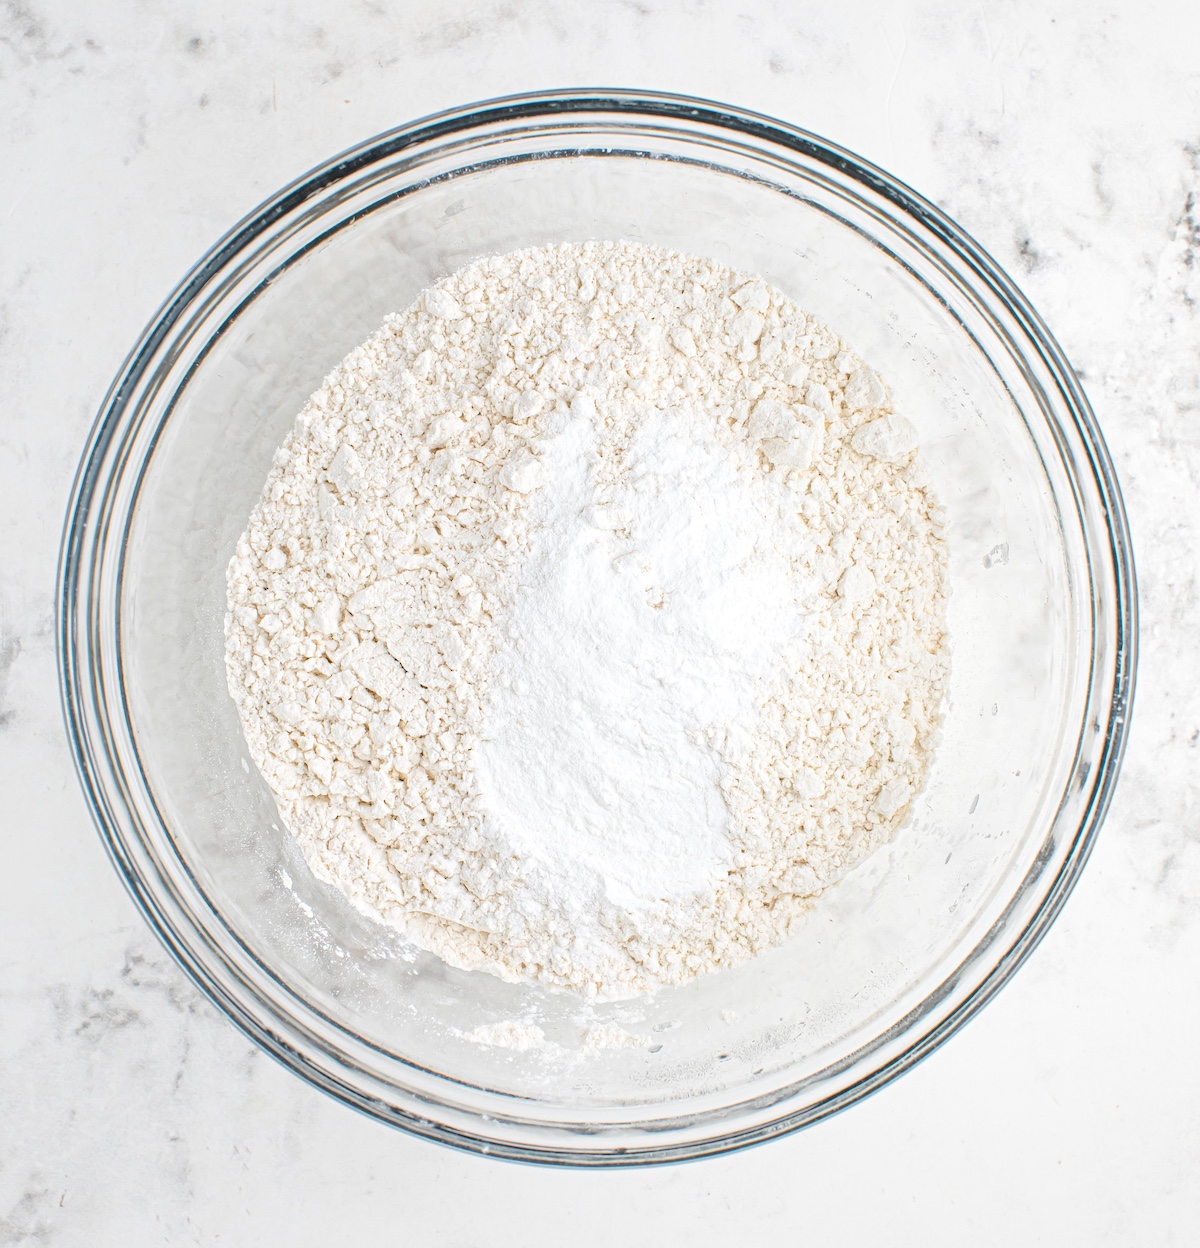 mix flour, baking powder, baking soda, and salt until combined